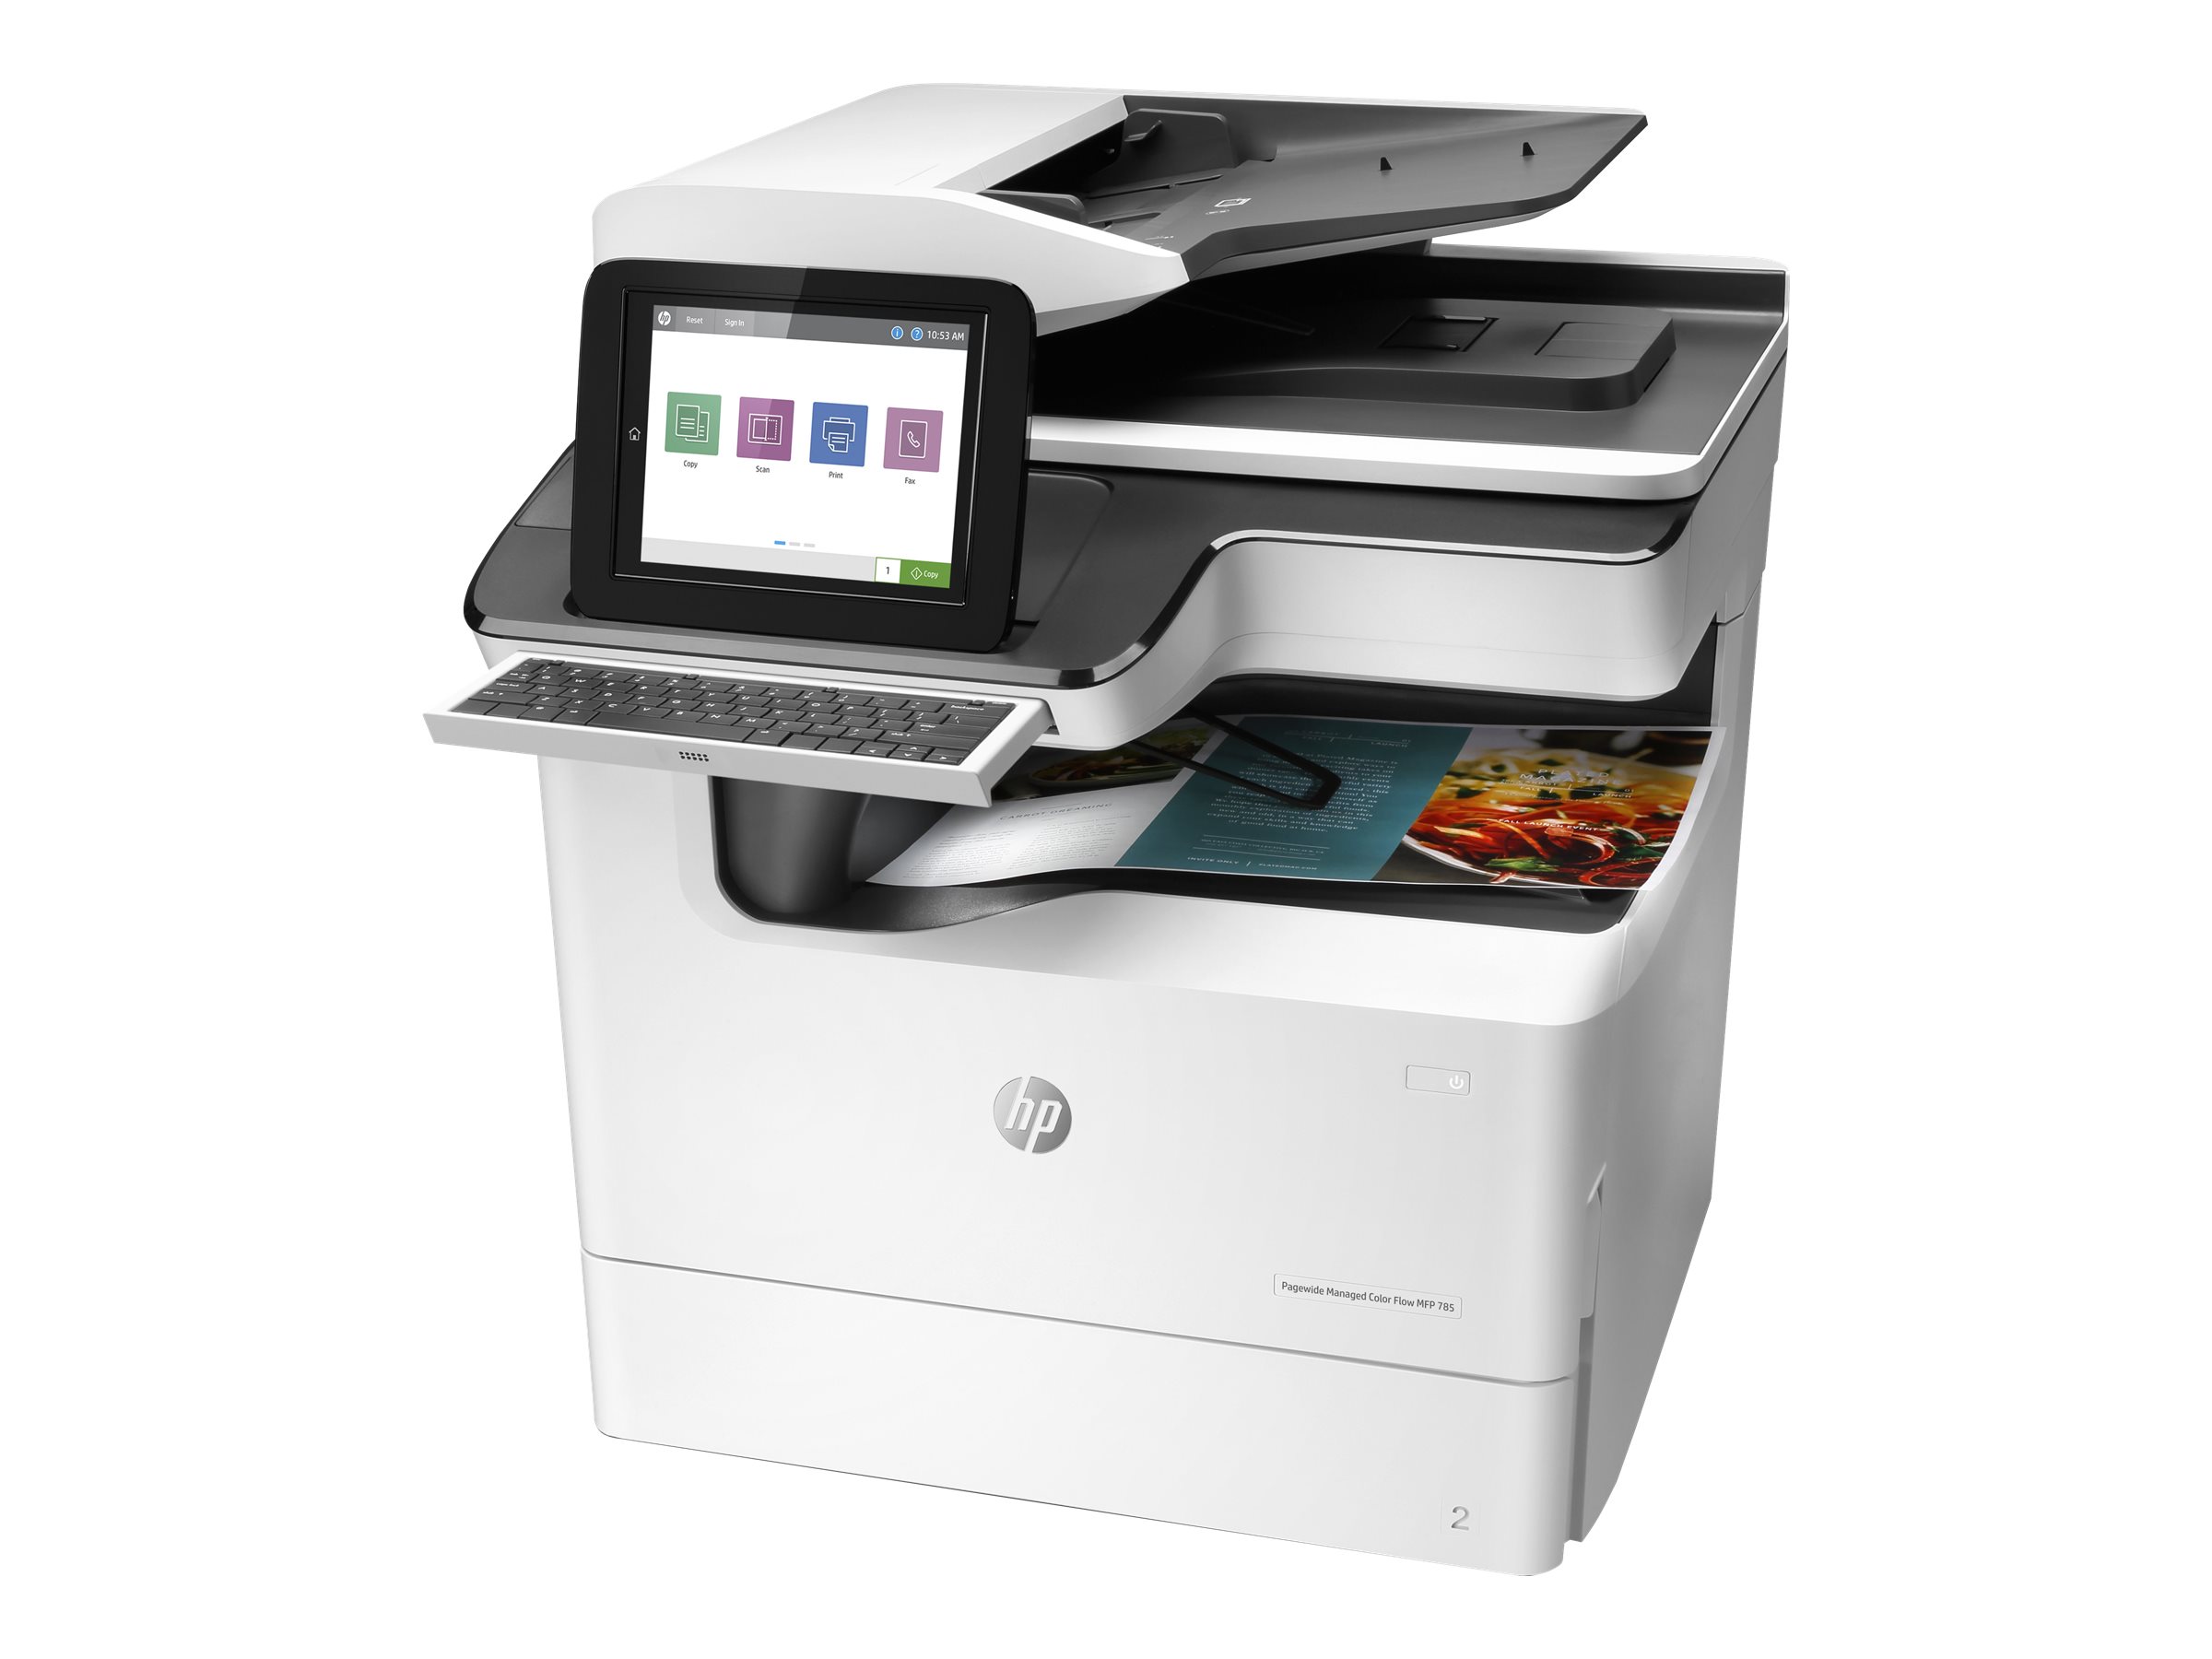 PageWide Enterprise Color MFP 785 Printer series